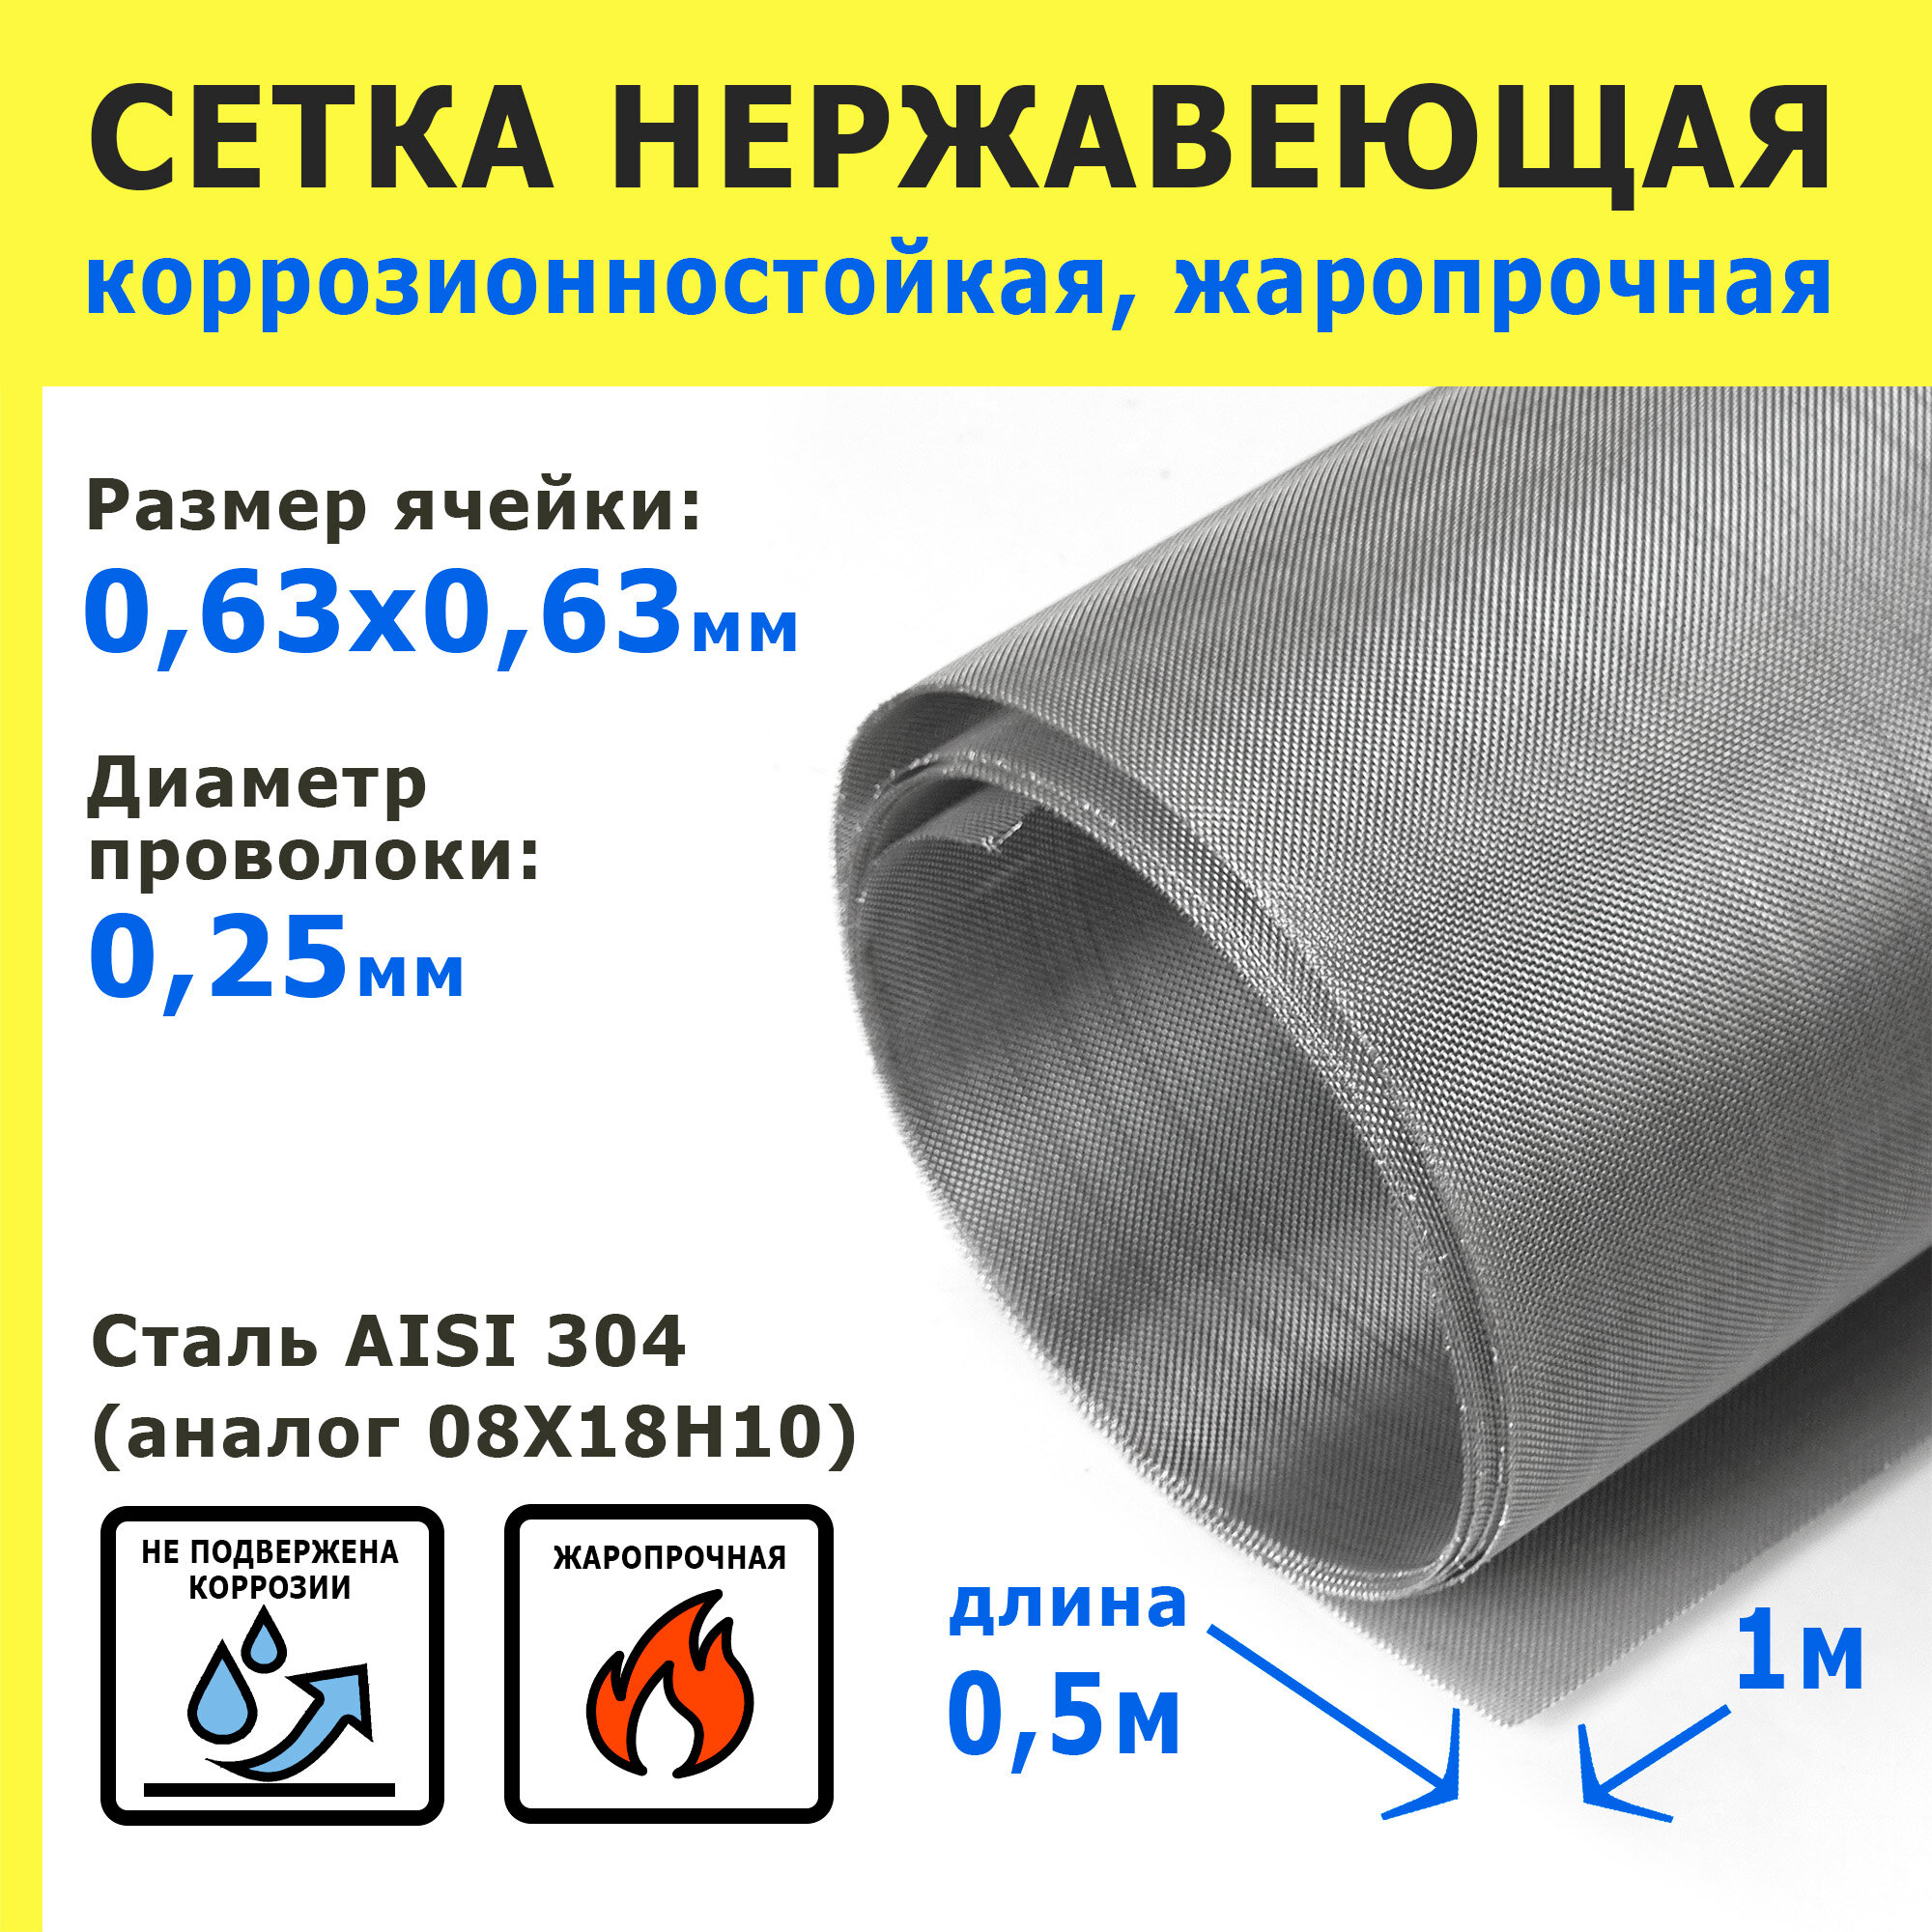 Сетка нержавеющая 0,63х0,63х0,25 мм для фильтрации, очистки, просеивания. Cталь AISI 304 (08Х18Н10). Размер 1х0,5 метр.